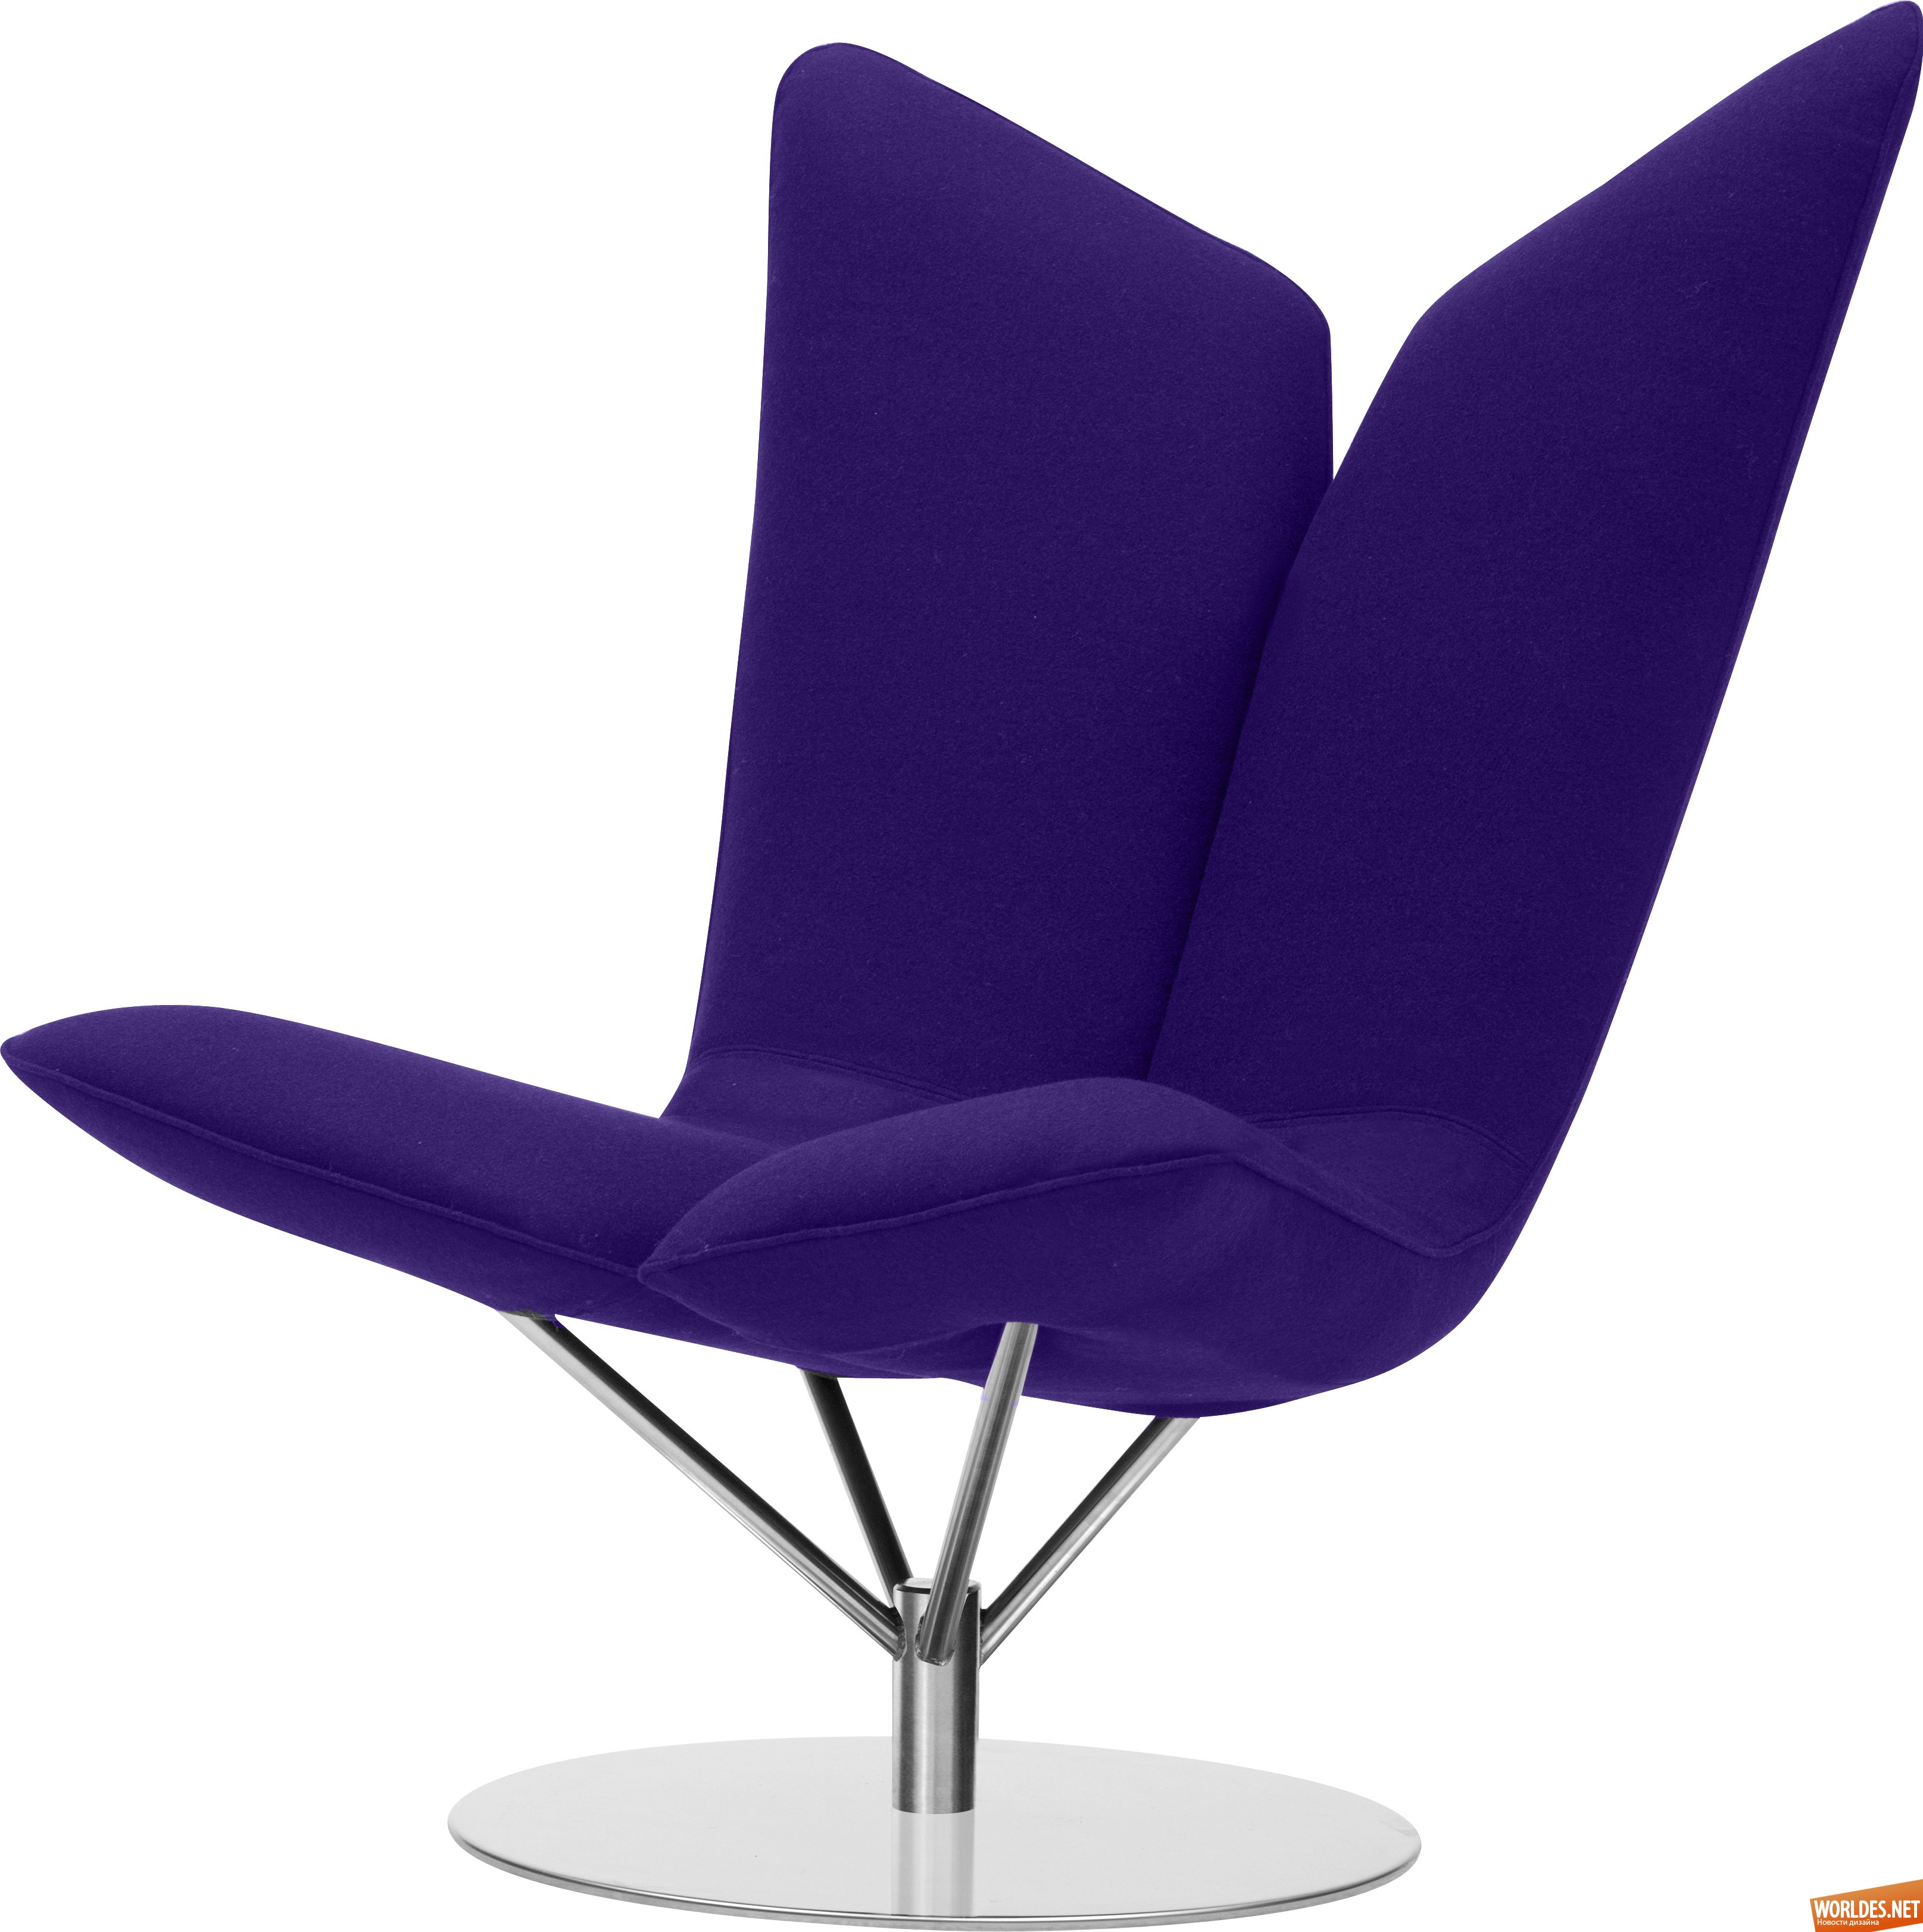 вращающие кресла, кресла, кресла для офиса, кресла и стулья для офиса, дизайнерские кресла, дизайнерские кресла фото